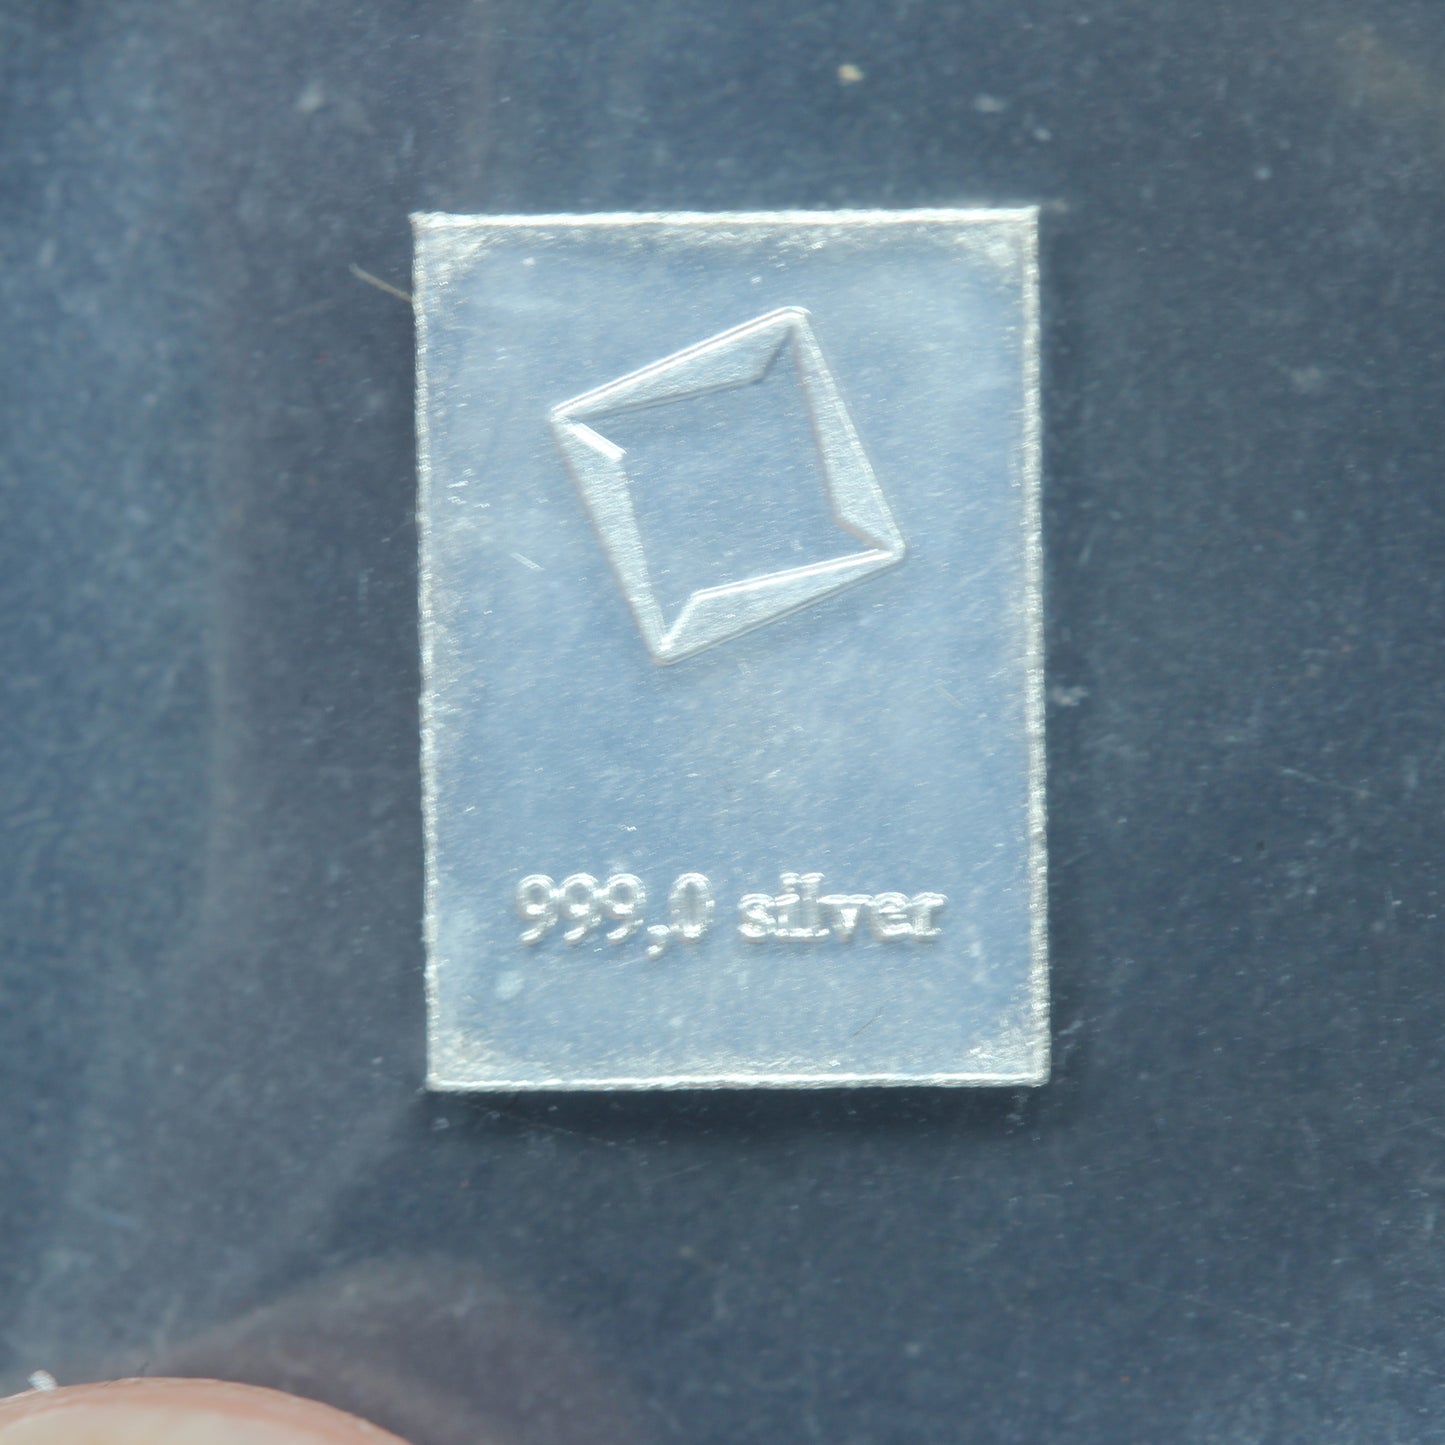 5 x 1 Gram Valcambi Suisse .999 Fine Silver Bar in APMEX Packaging